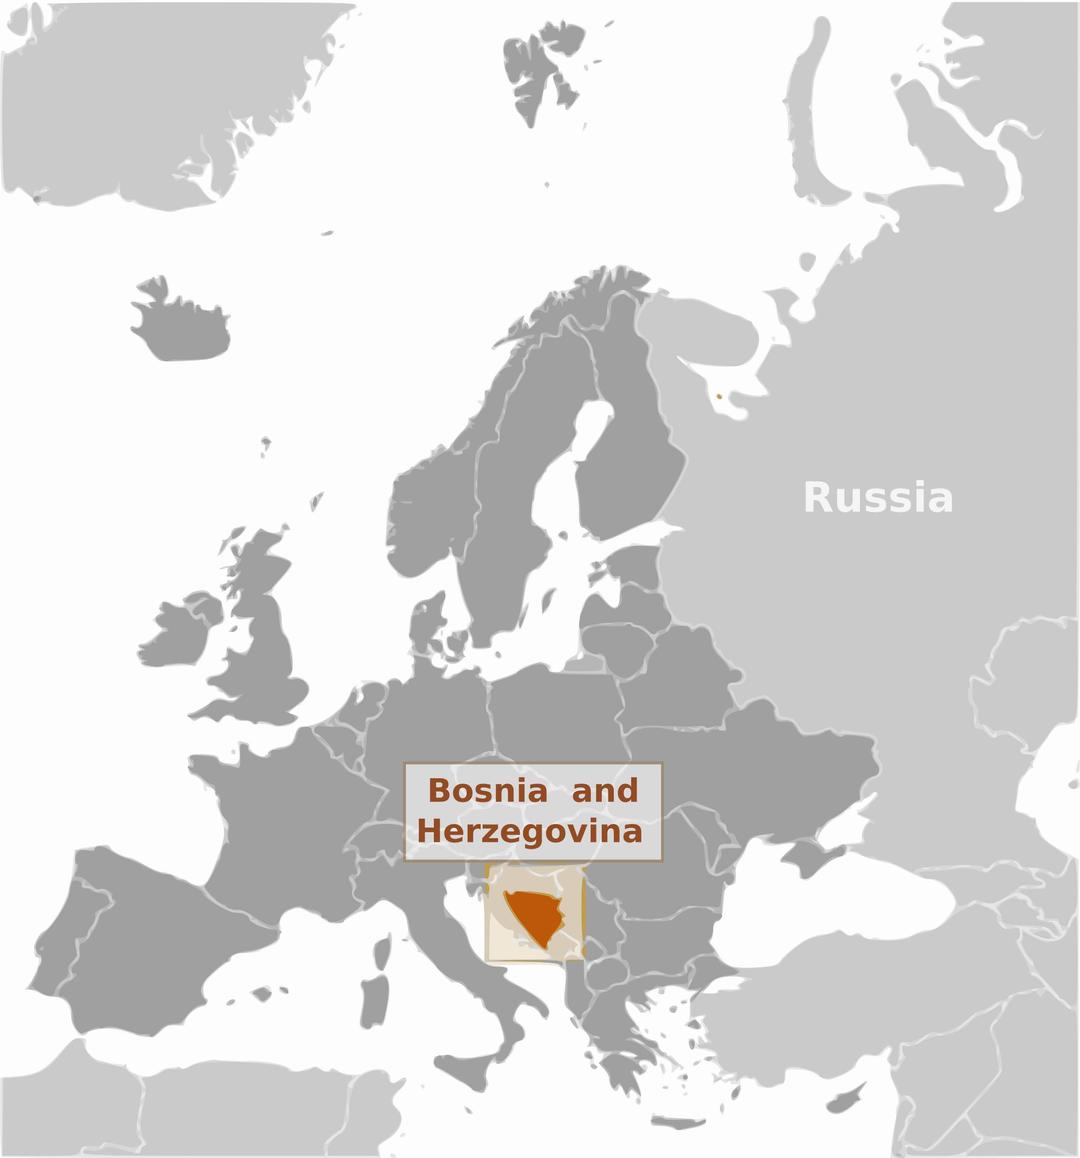 Bosnia and Herzegovina location label png transparent